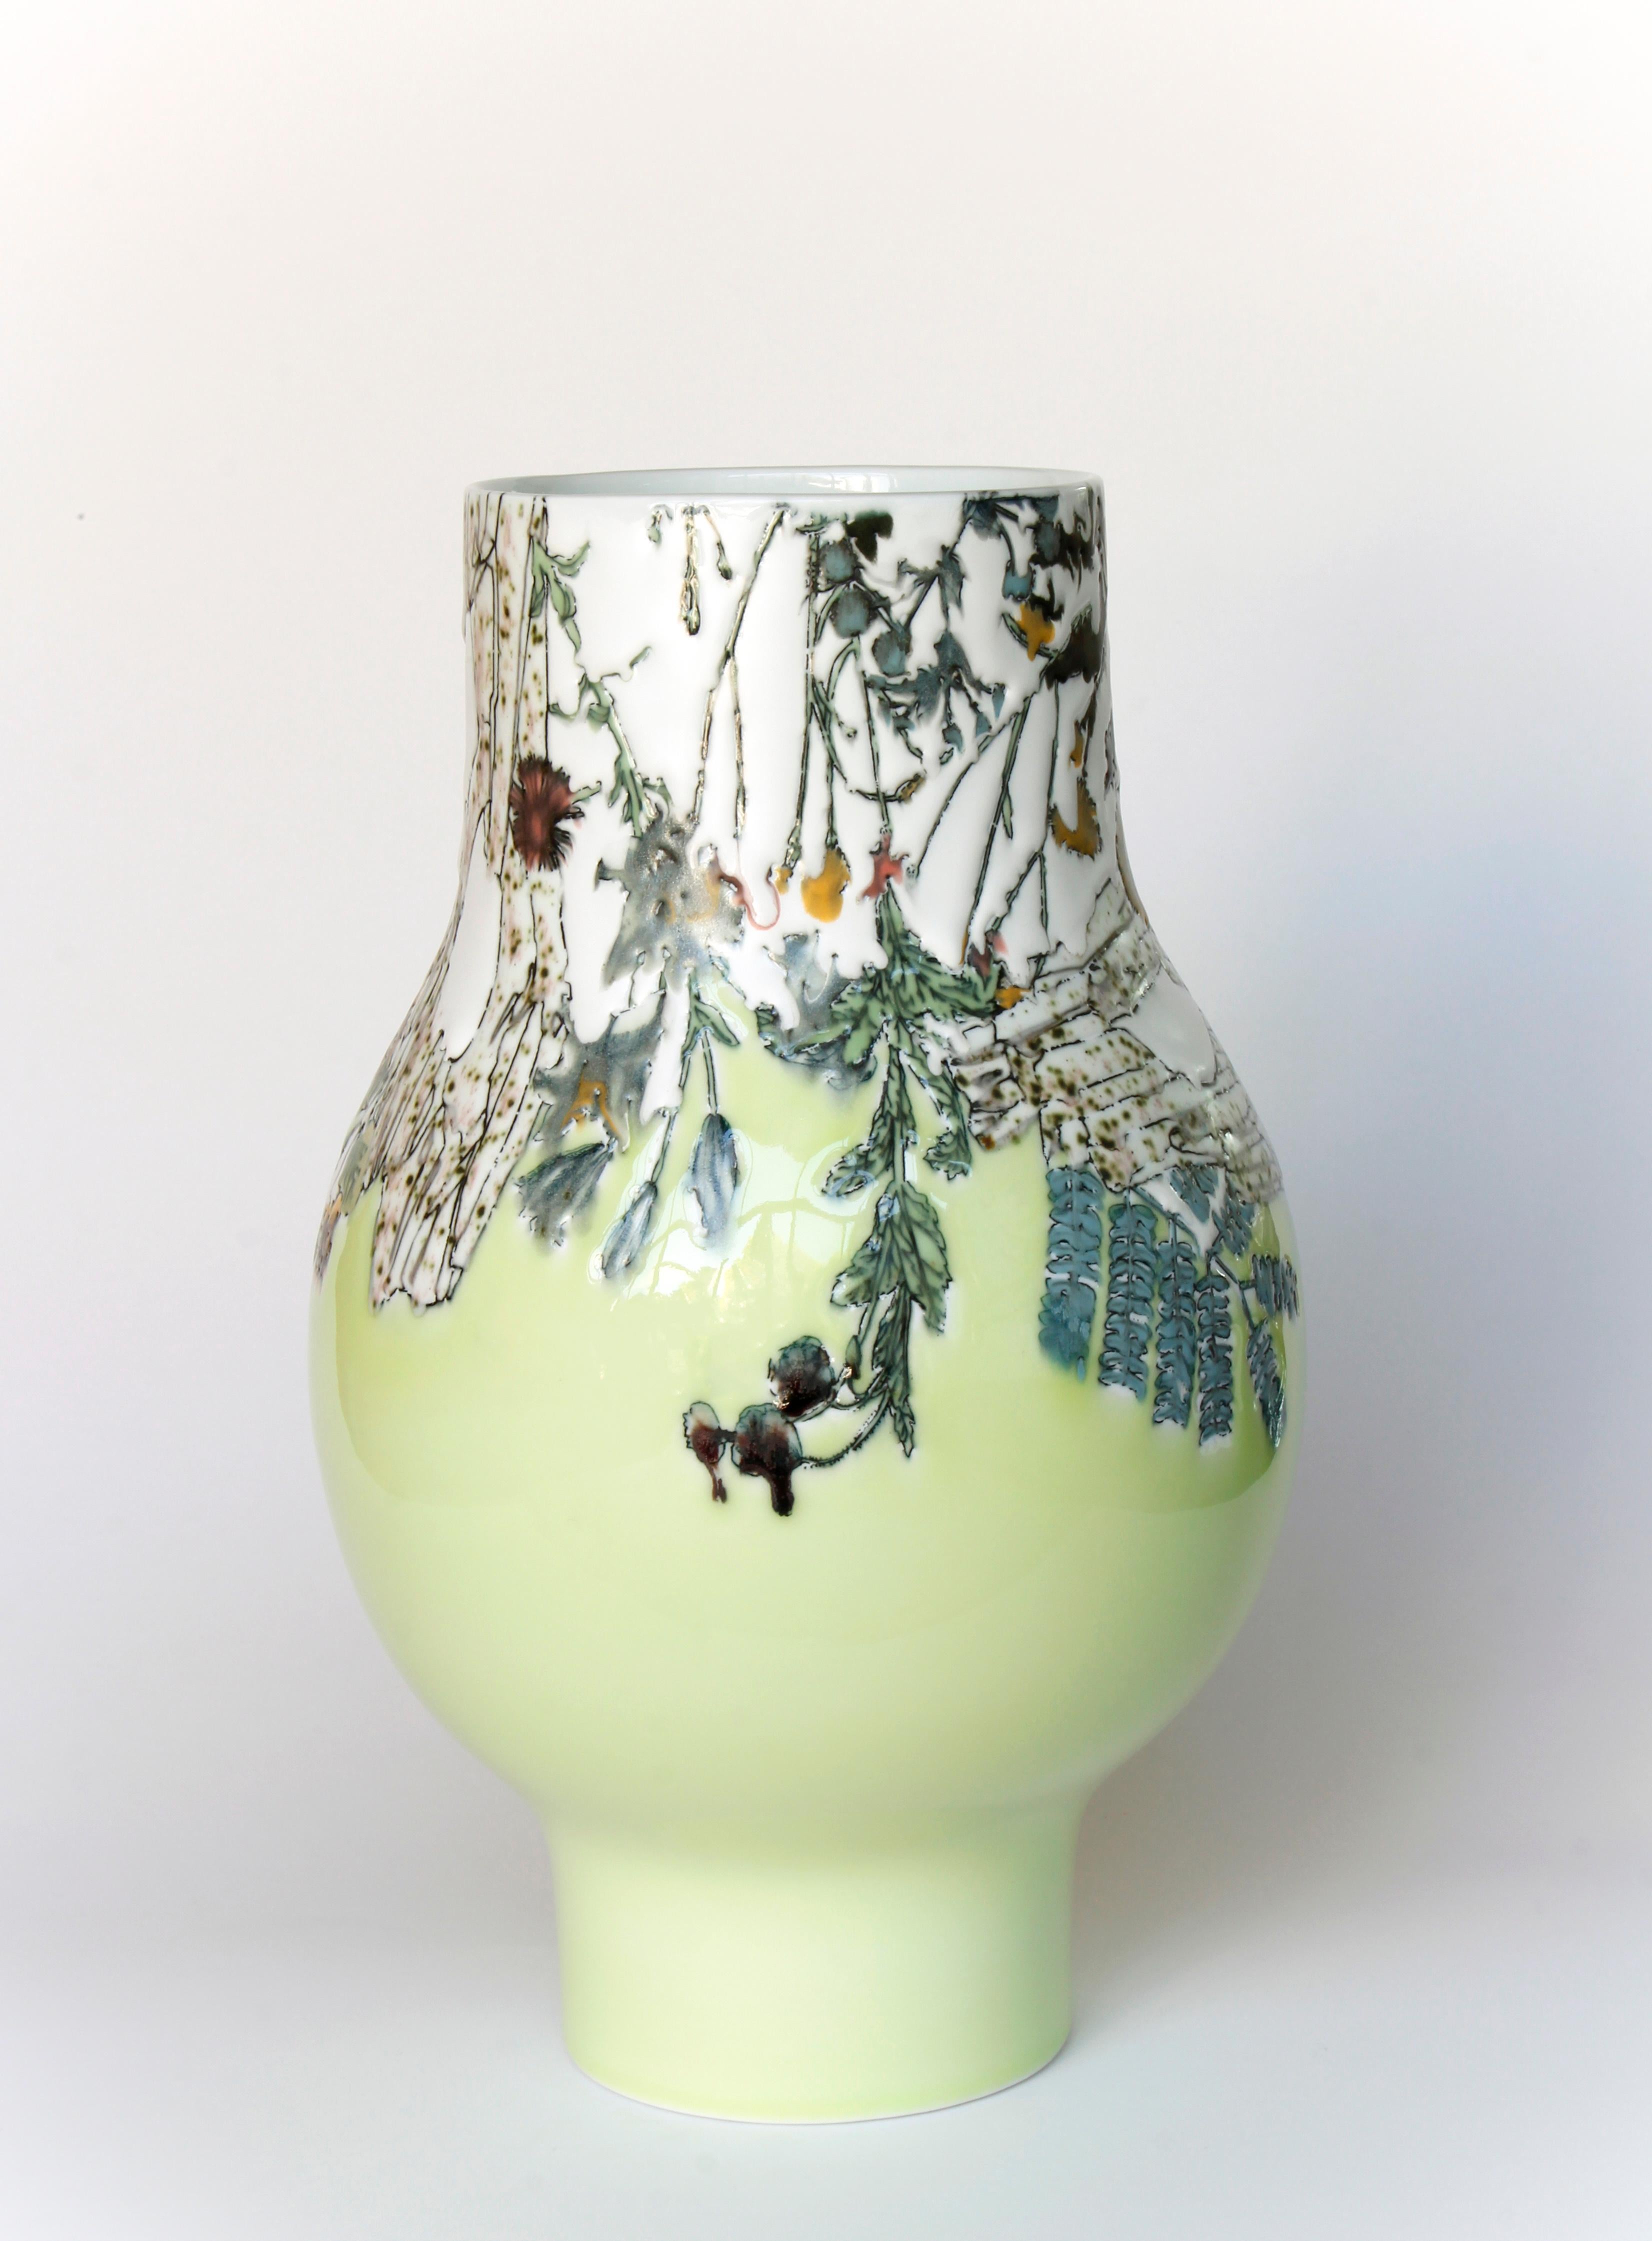 Neon Green Globe Vase 4 - Art by Future Retrieval (Katie Parker and Guy Michael Davis)